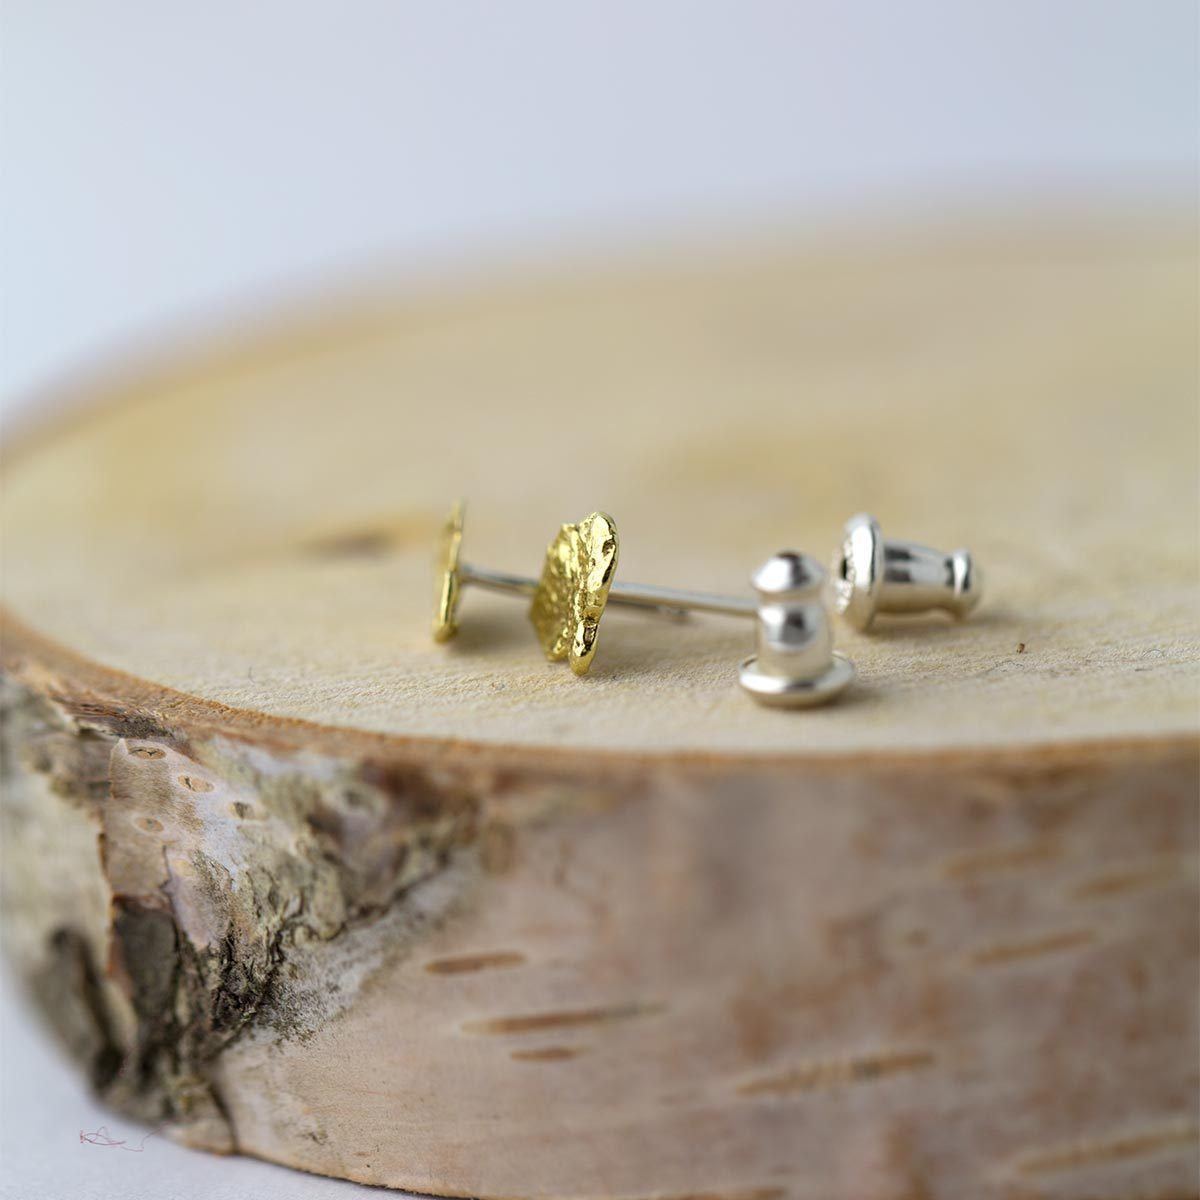 Alaska Gold Nugget Flake Earrings - Handmade Jewelry by Burnish